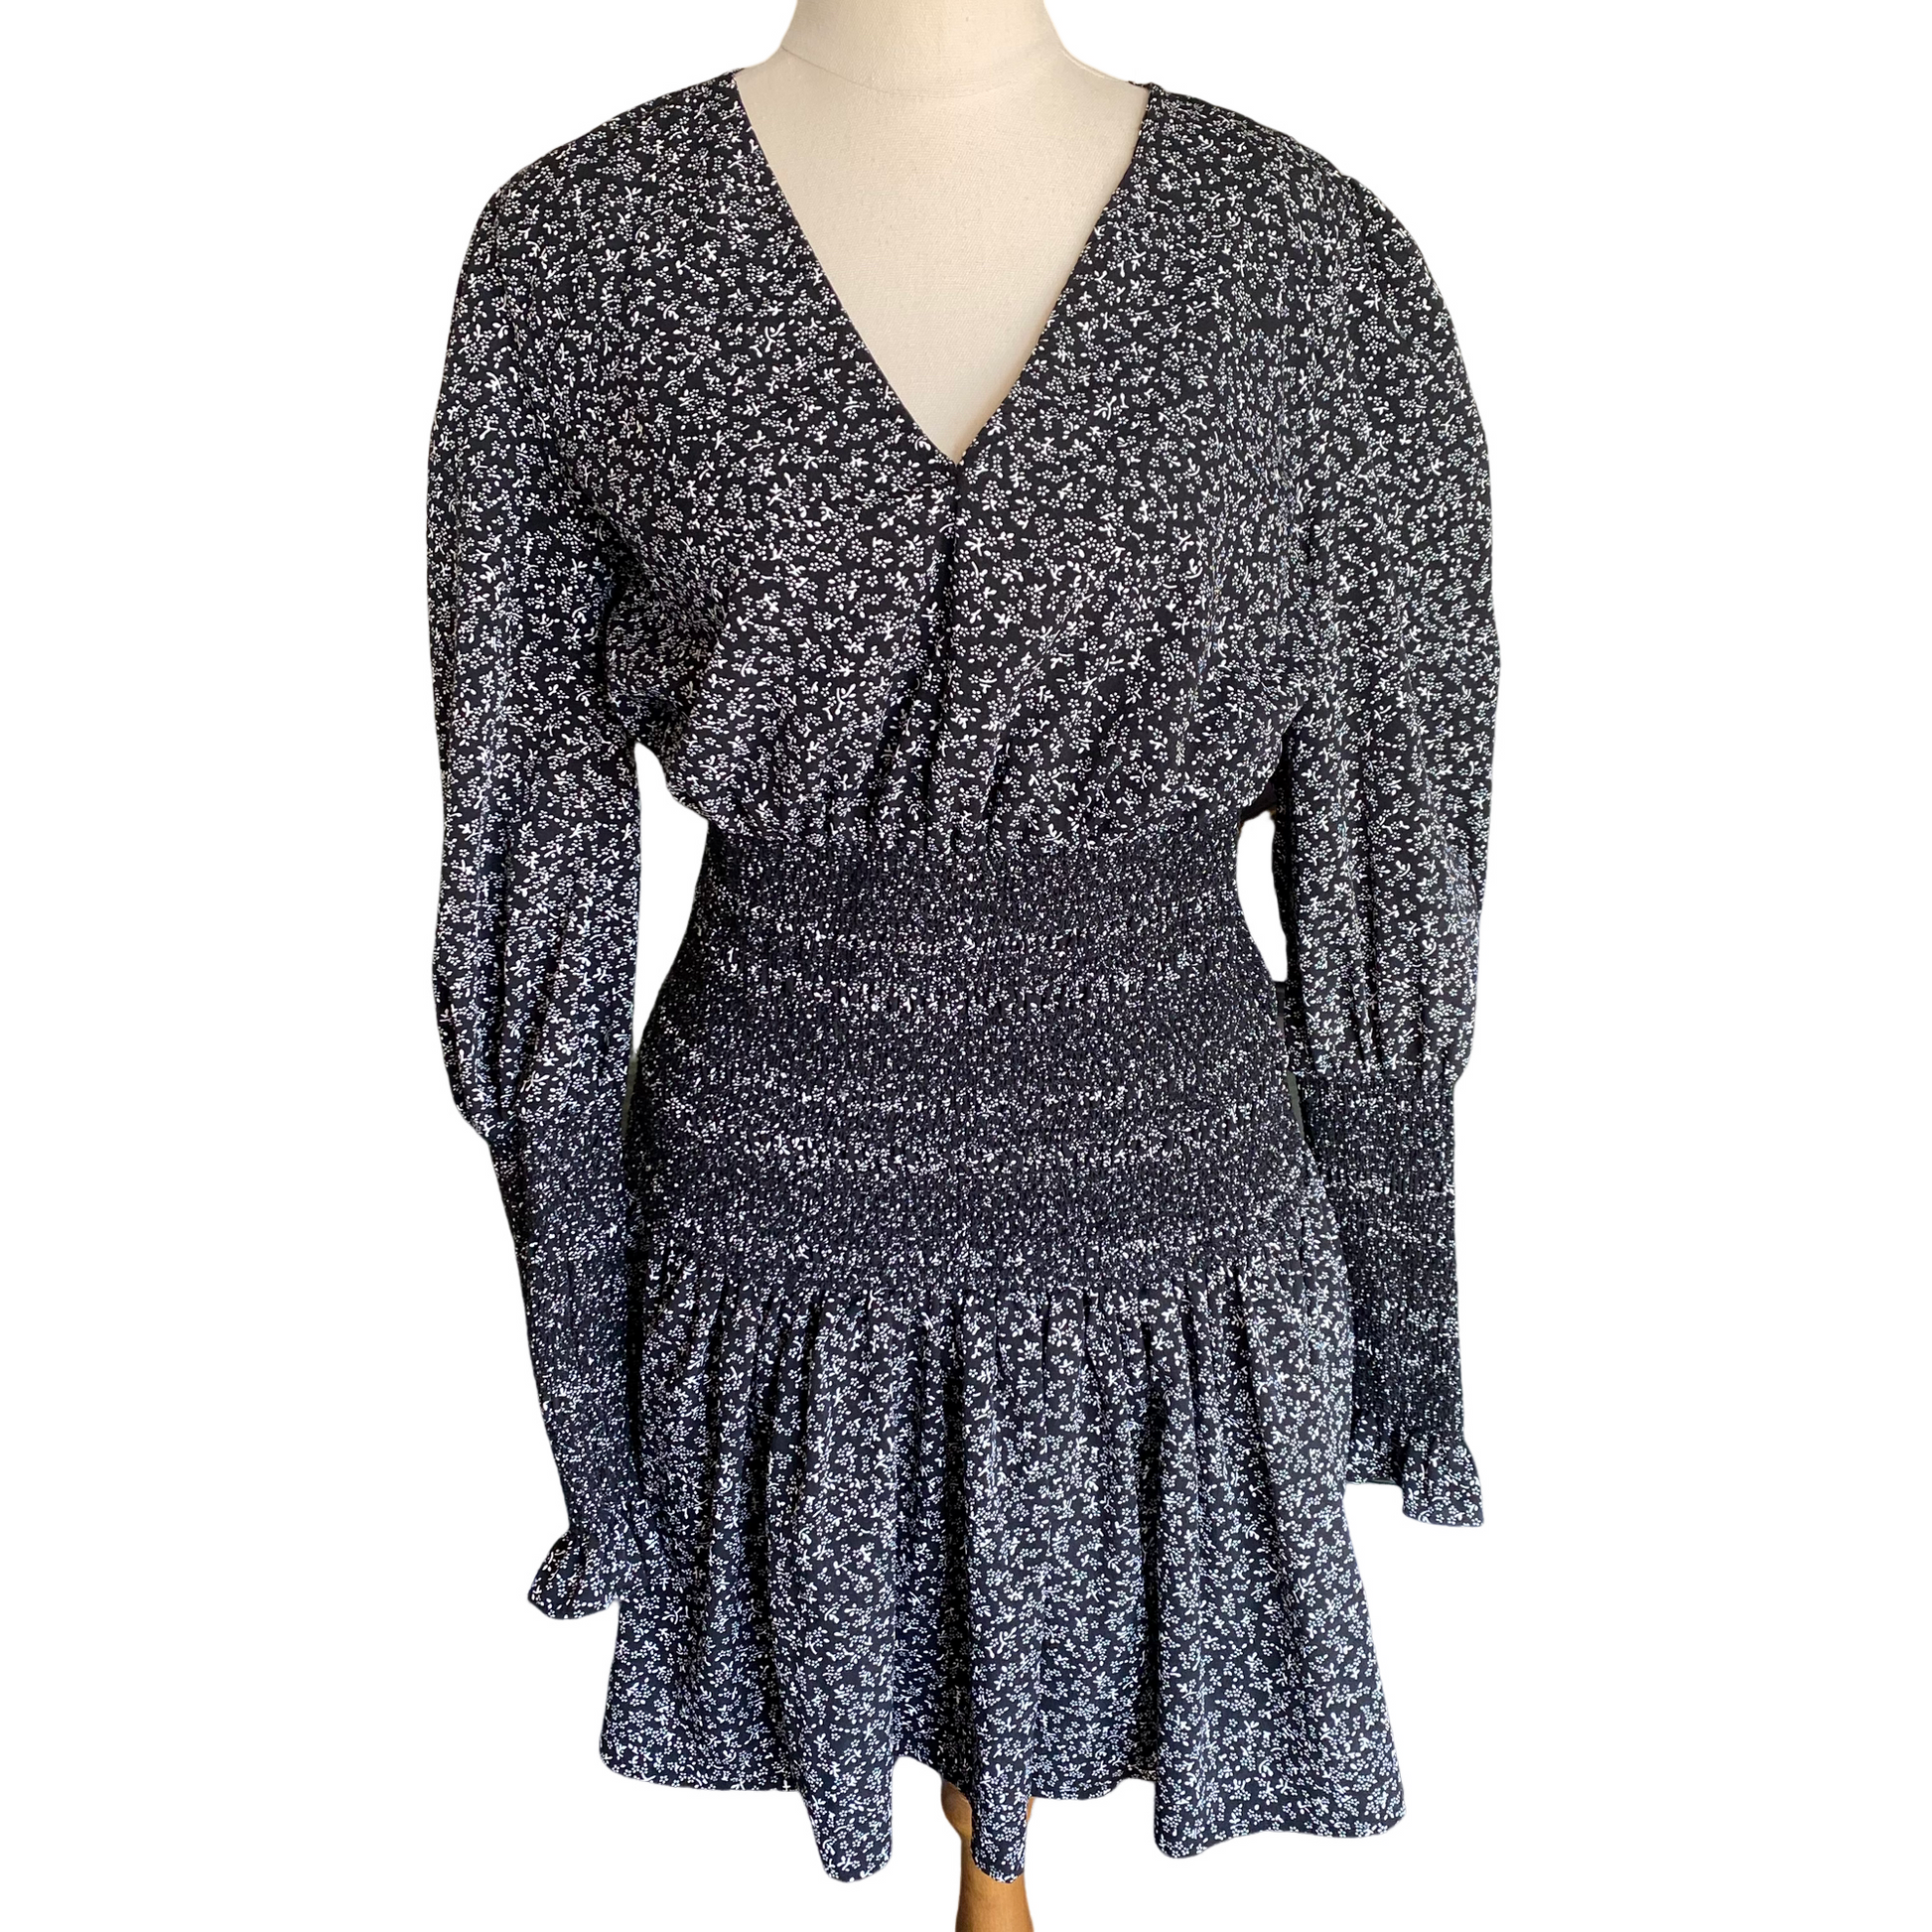 Topshop shirred waist mini dress in monochrome | size 12